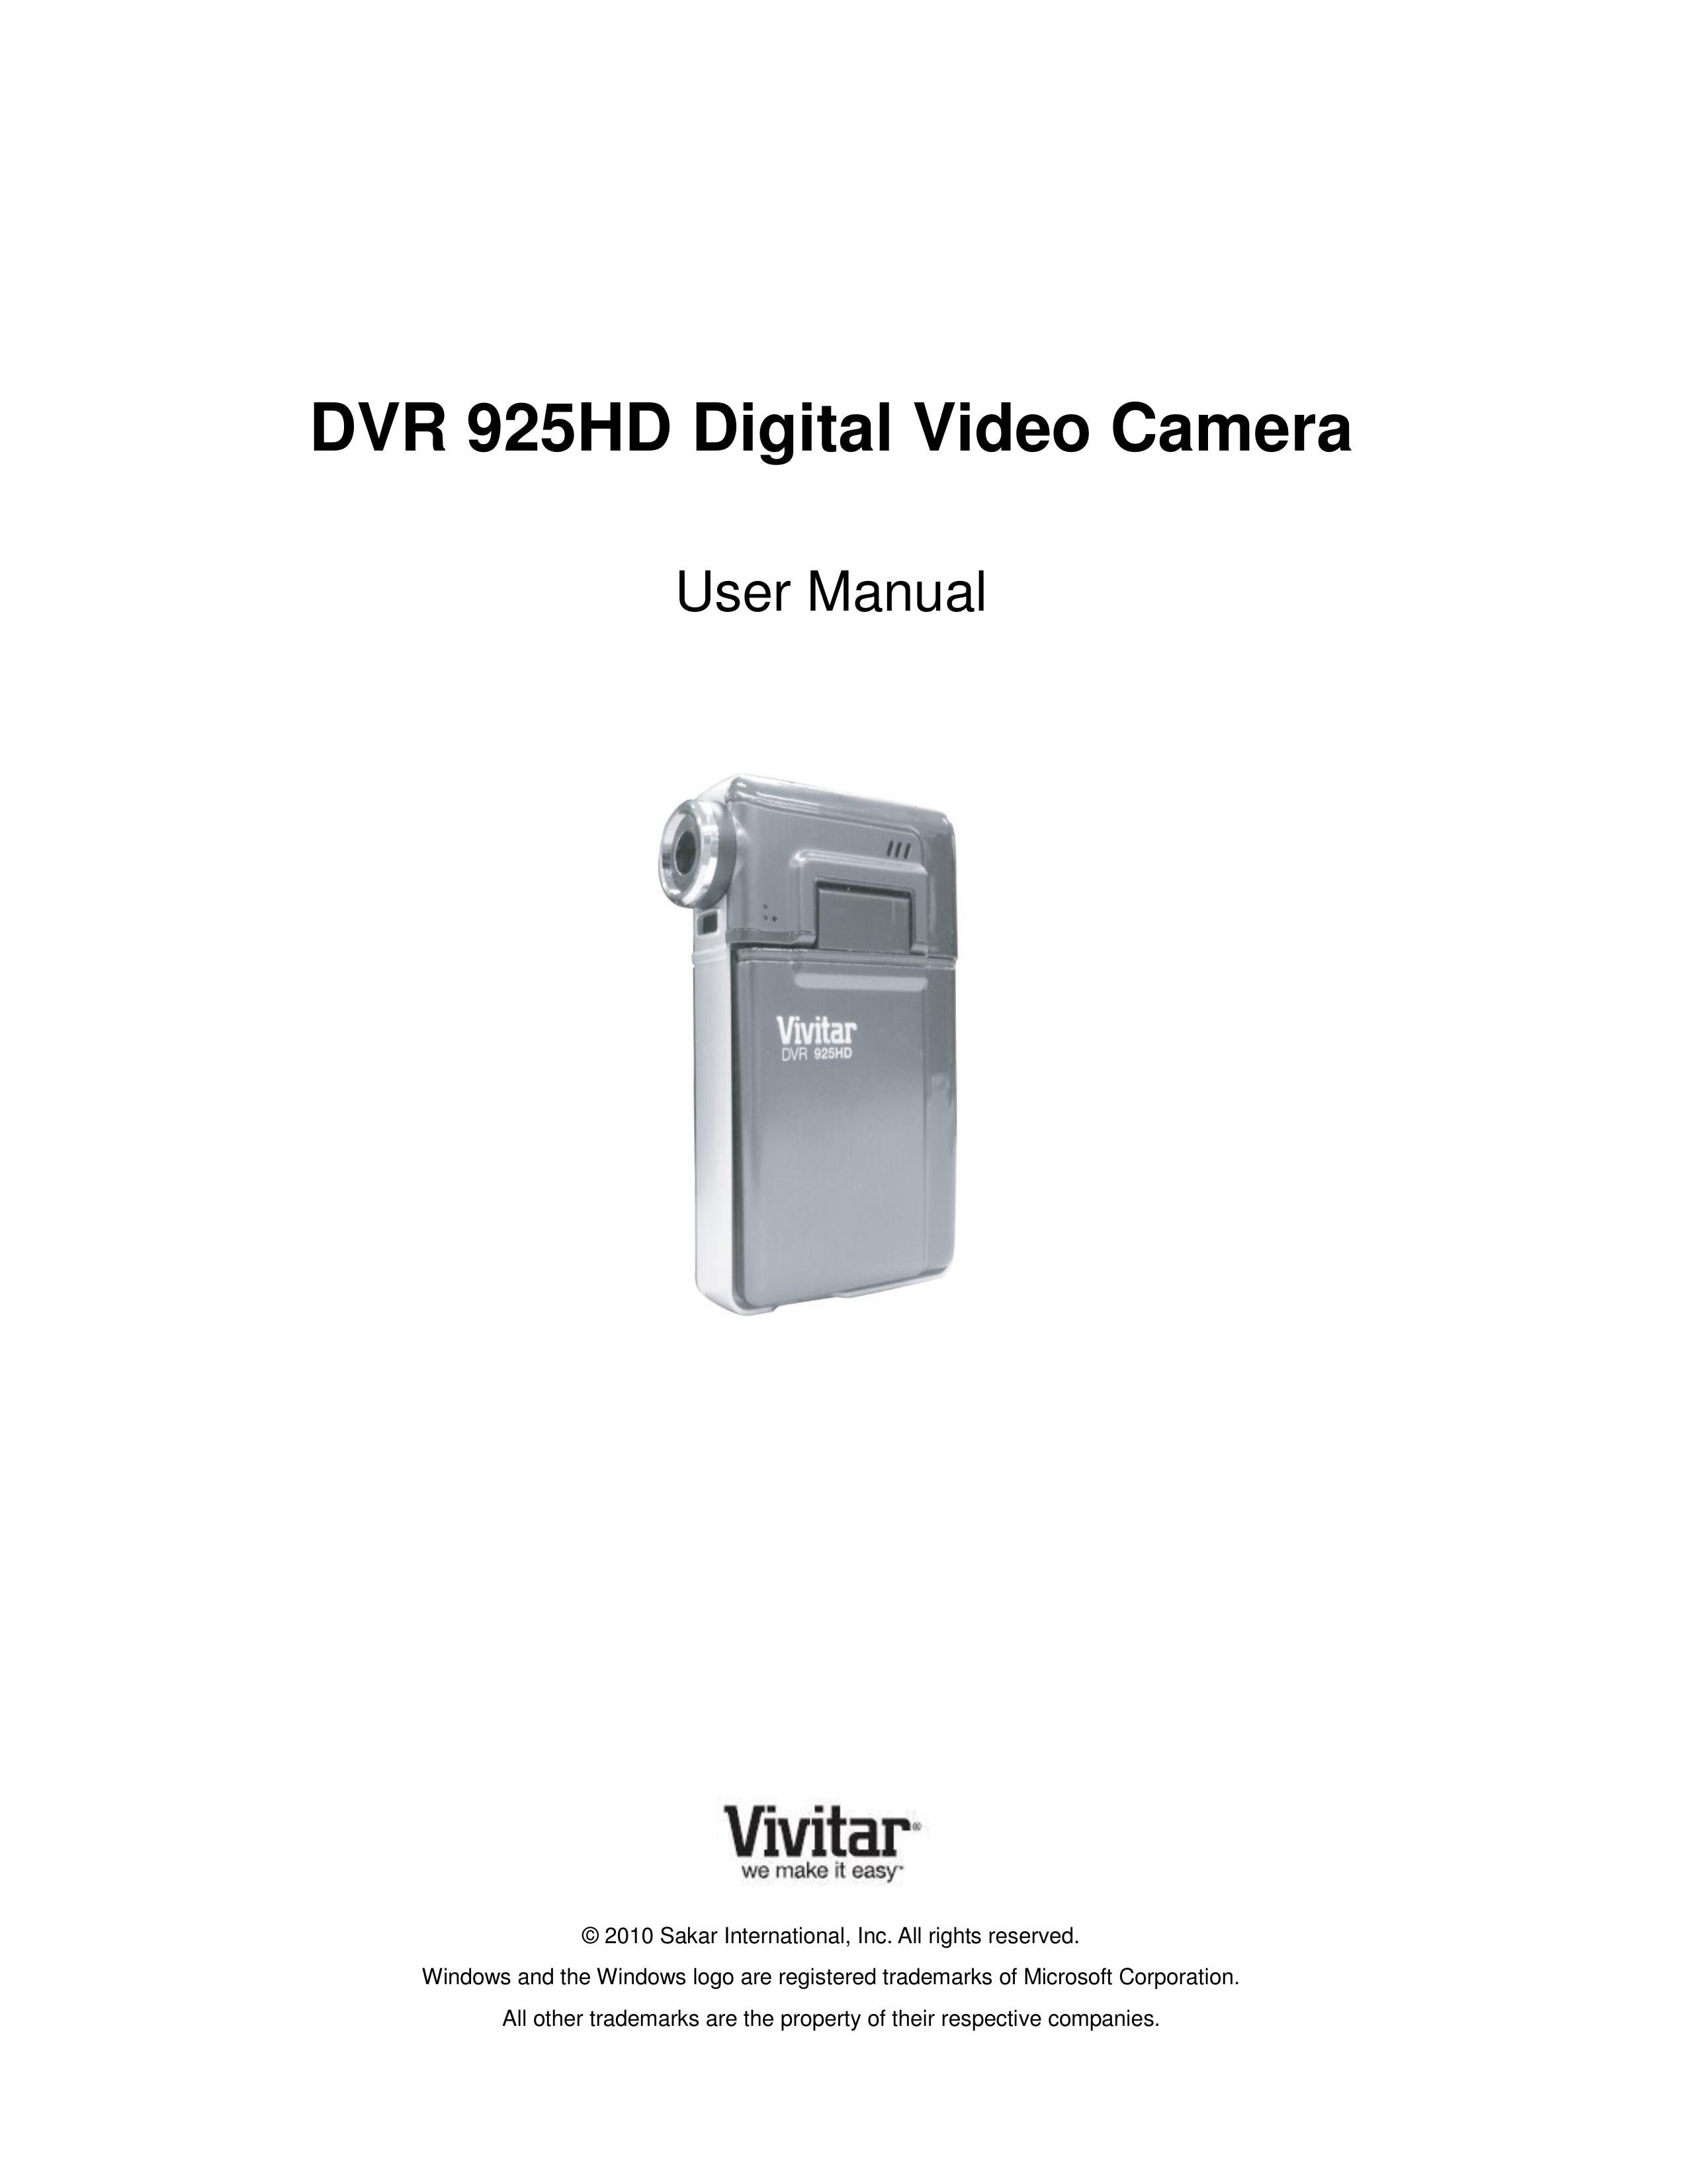 Vivitar DVR 925HD Camcorder User Manual